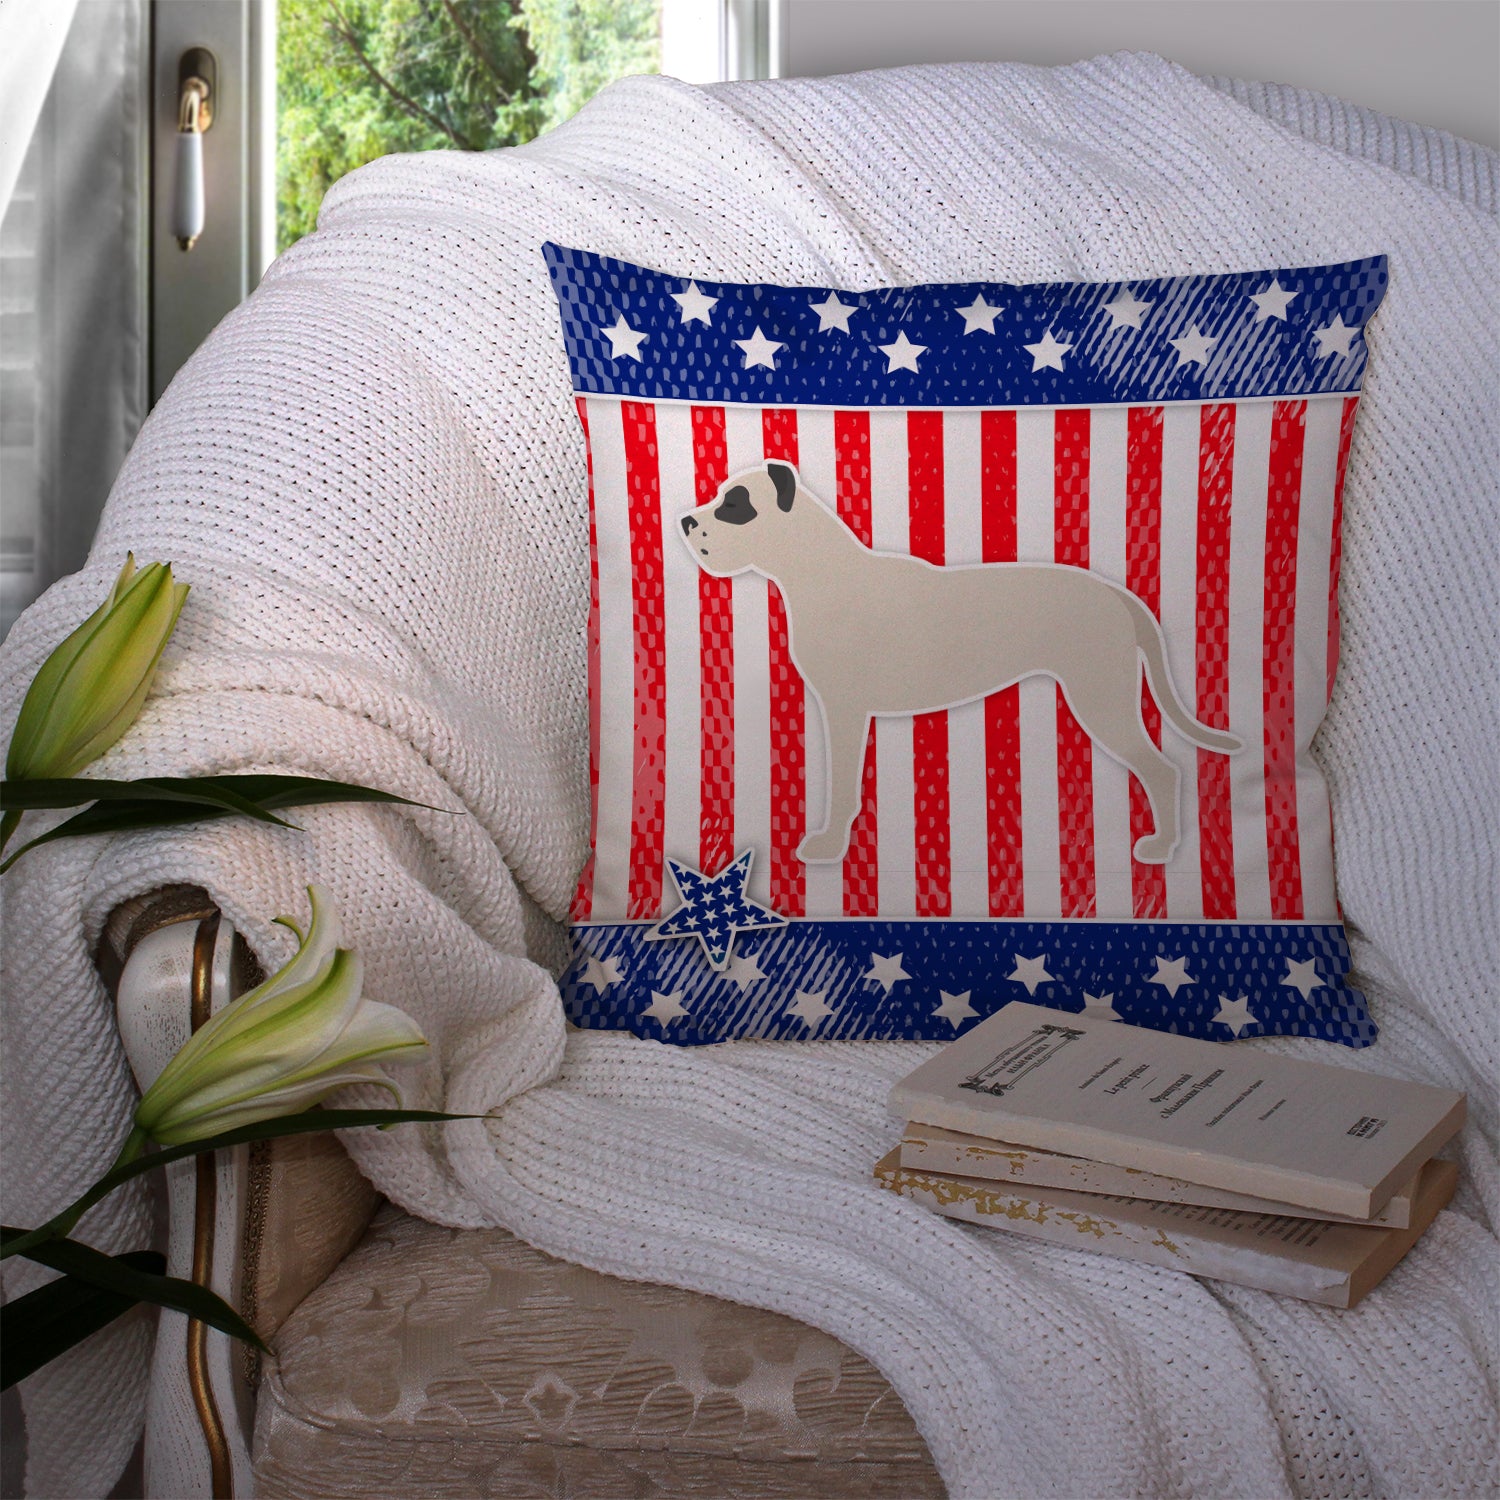 USA Patriotic Dogo Argentino Fabric Decorative Pillow BB3367PW1414 - the-store.com